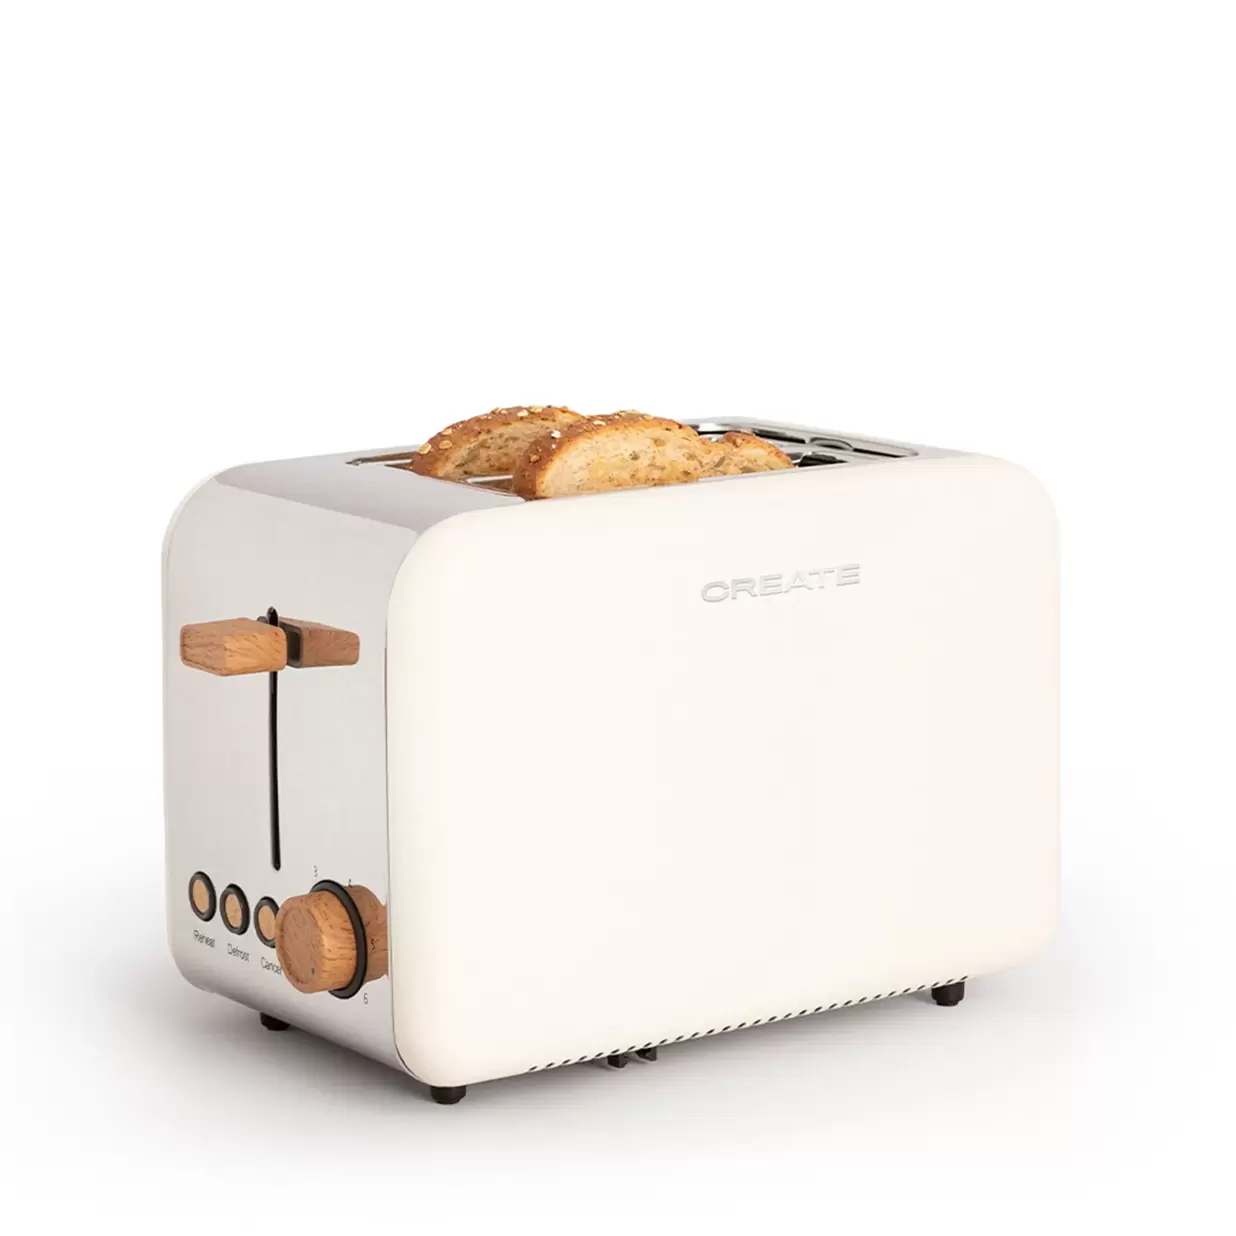 CREATE Toaster hvid på tilbud til 499 kr. hos Sinnerup